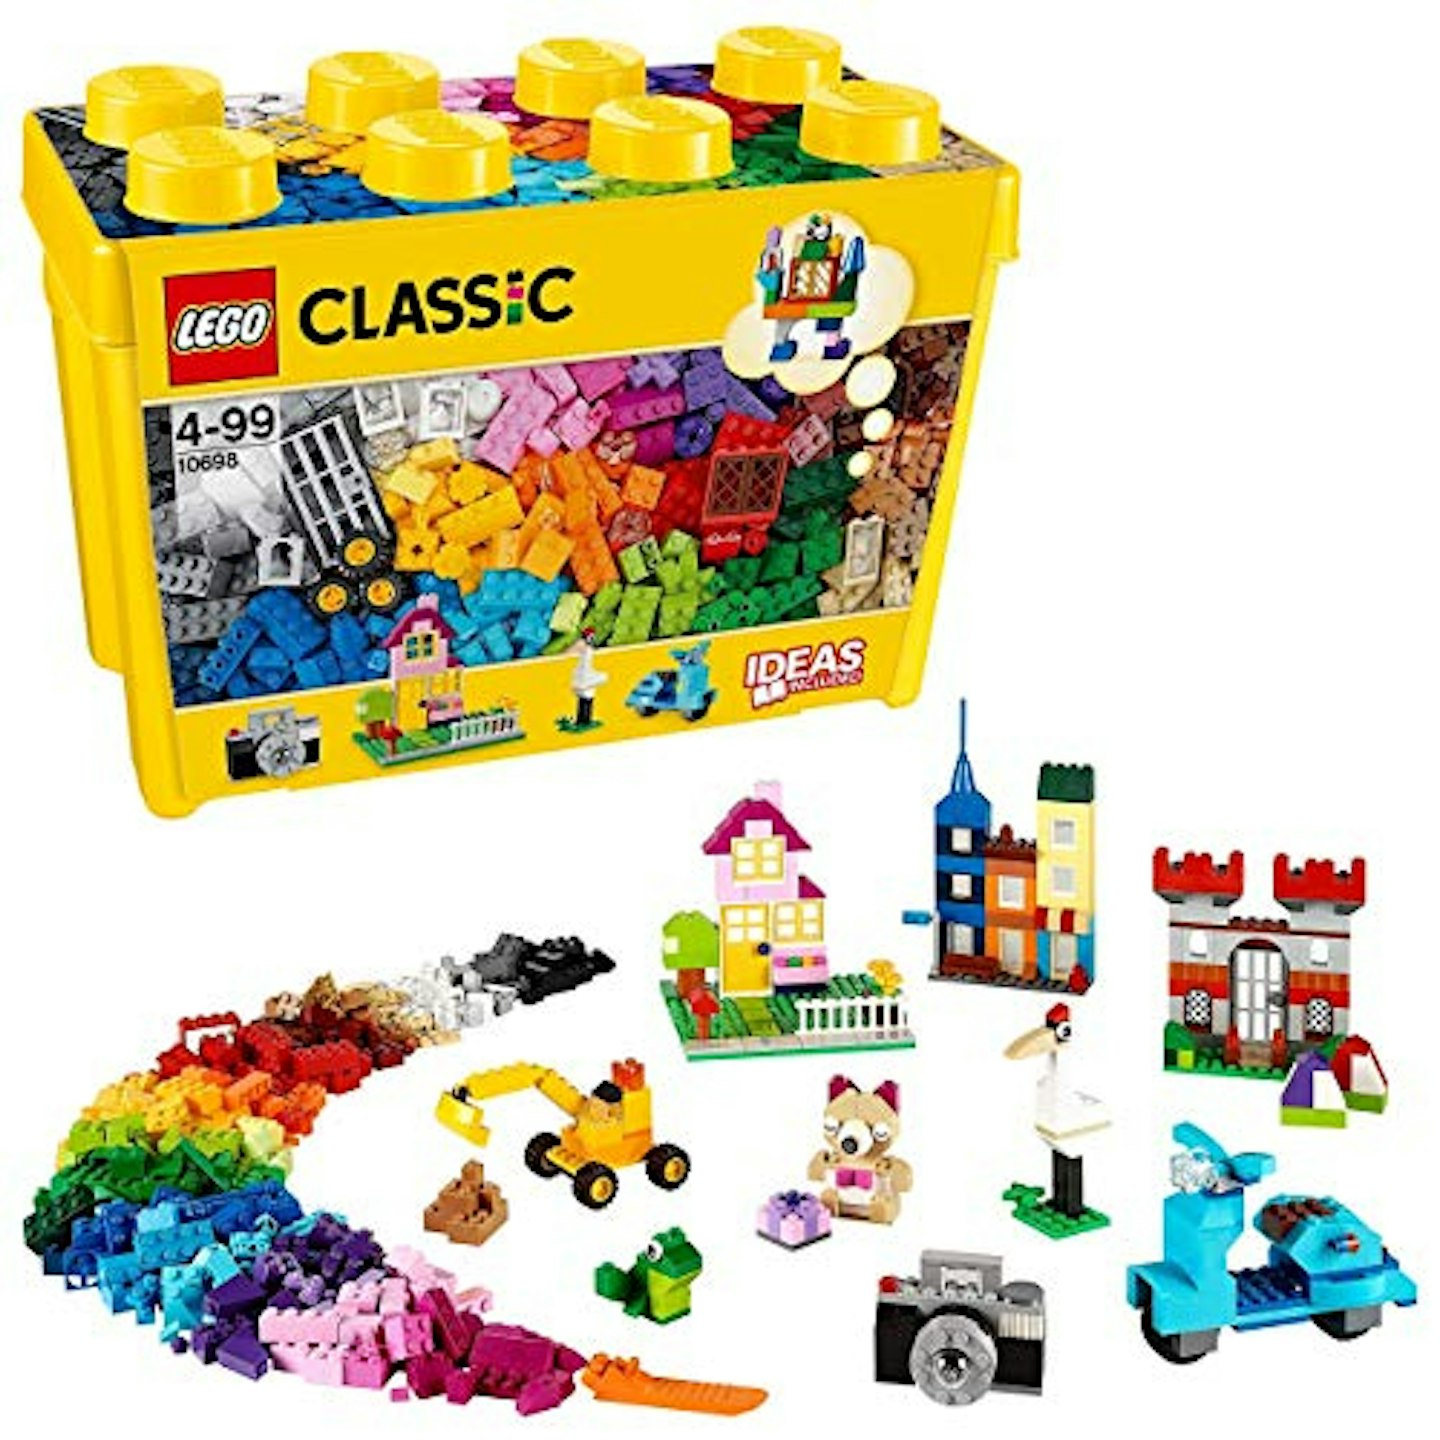 LEGO 10698 Classic Large Creative Brick Box Construction Set